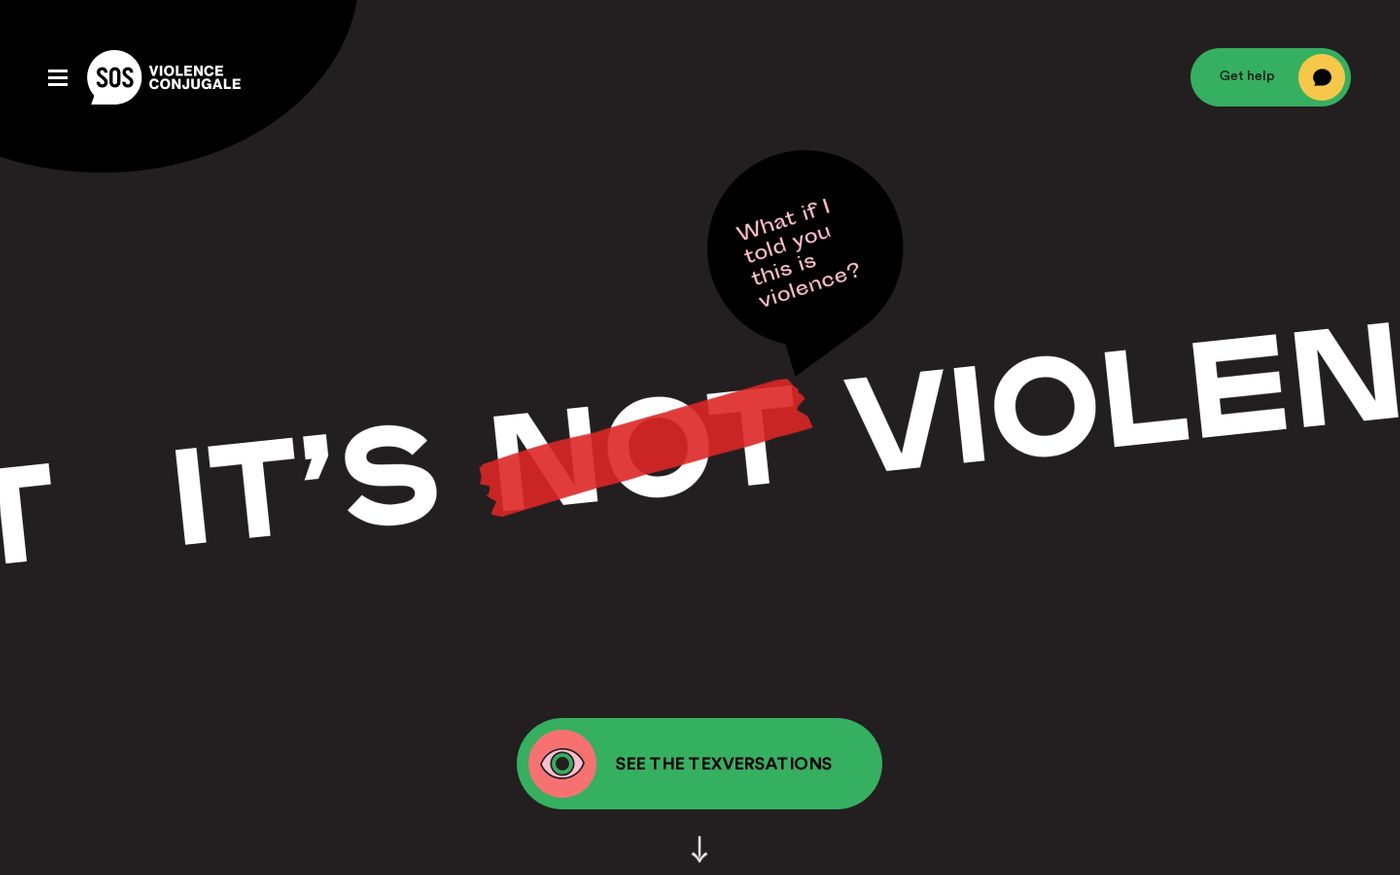 Screenshot of It's n̶o̶t̶ violent — SOS Violence Conjugale website